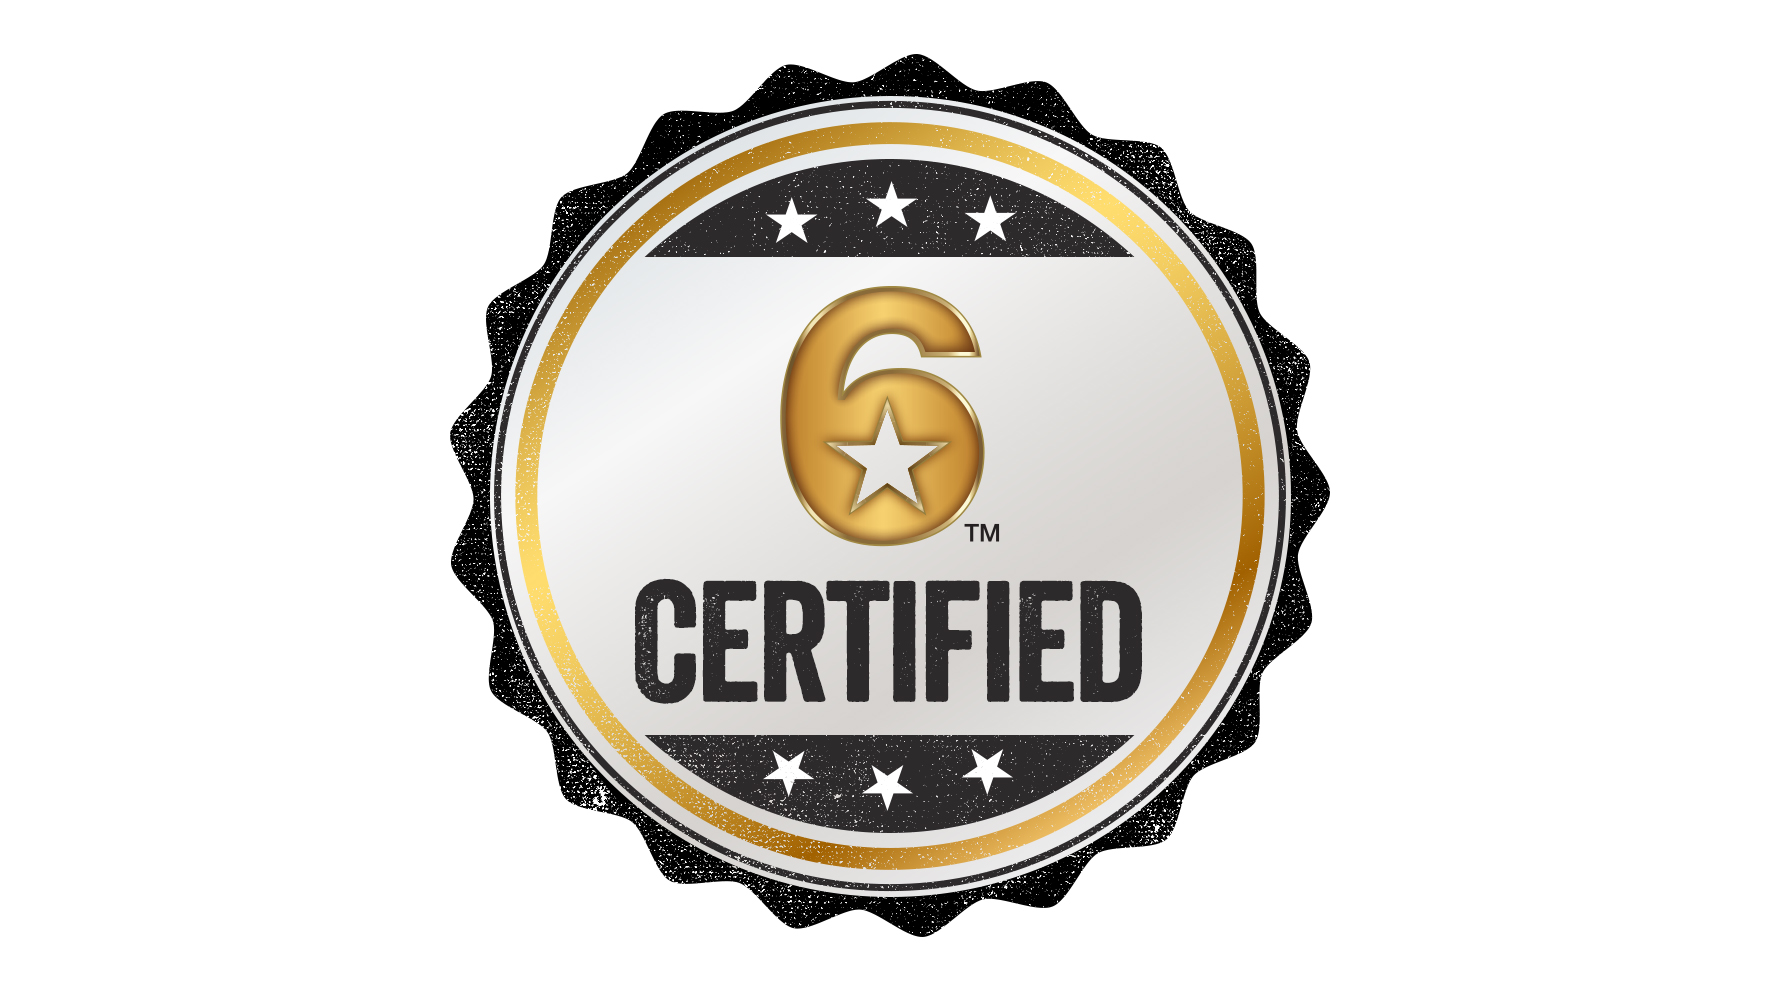 6 Certified